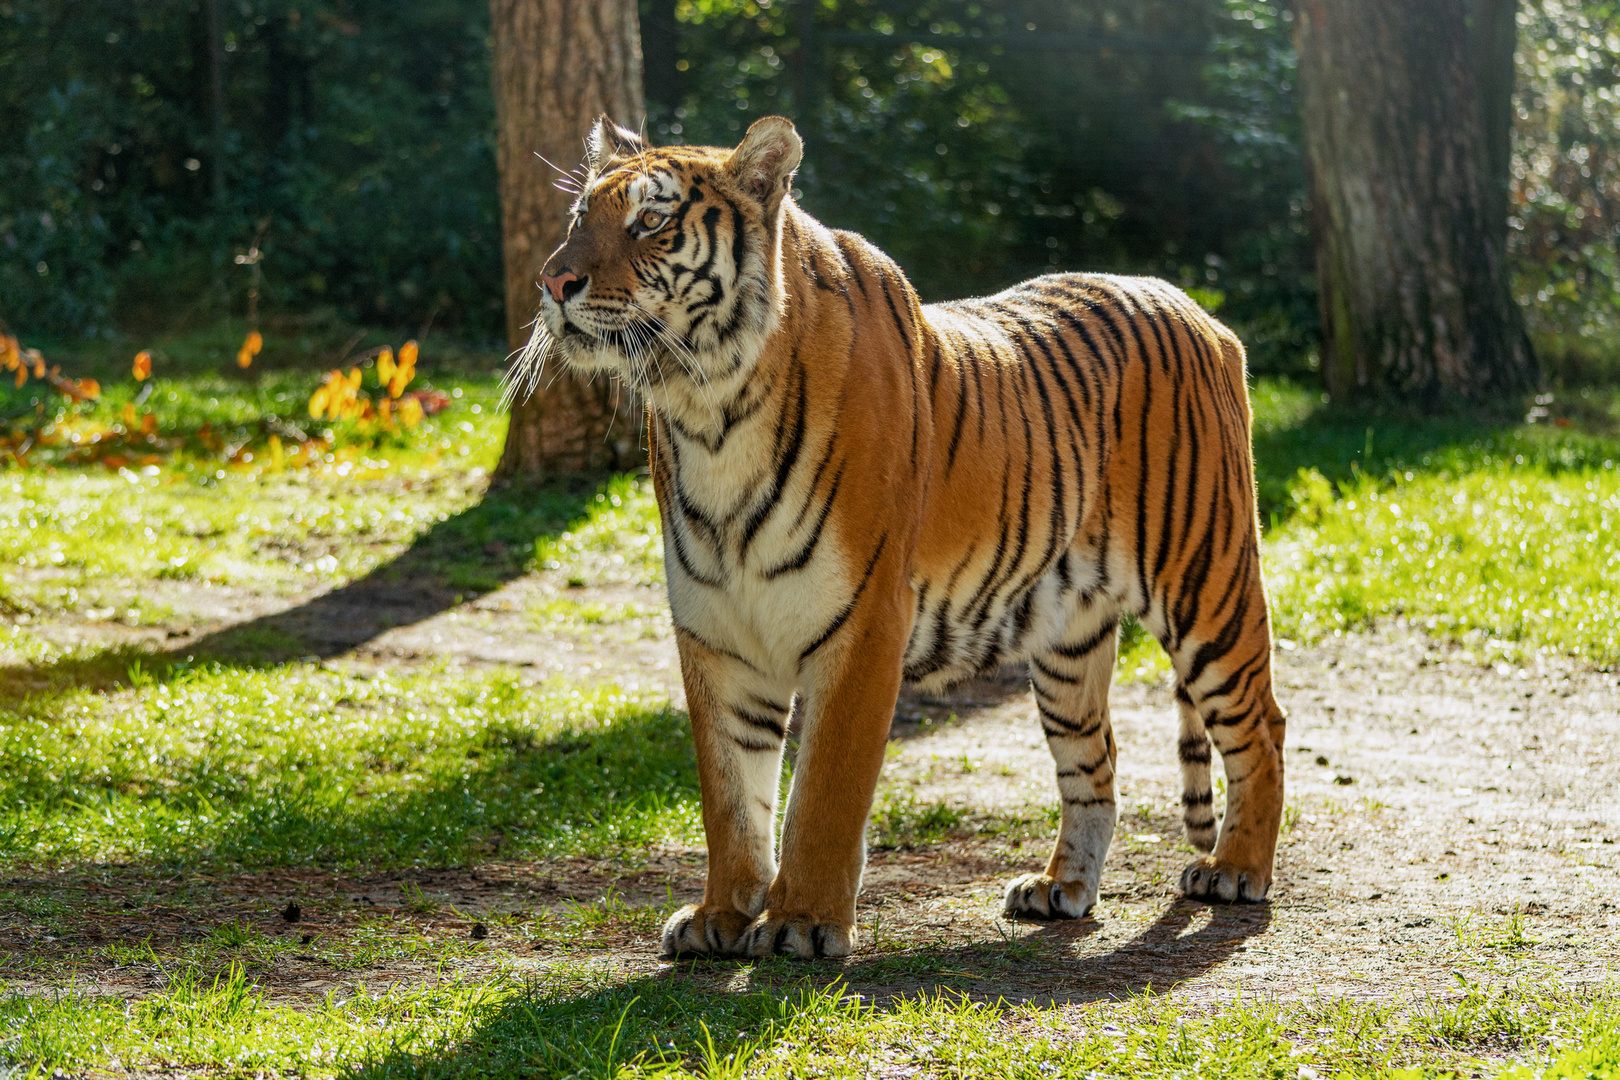 Tiger_serengetipark